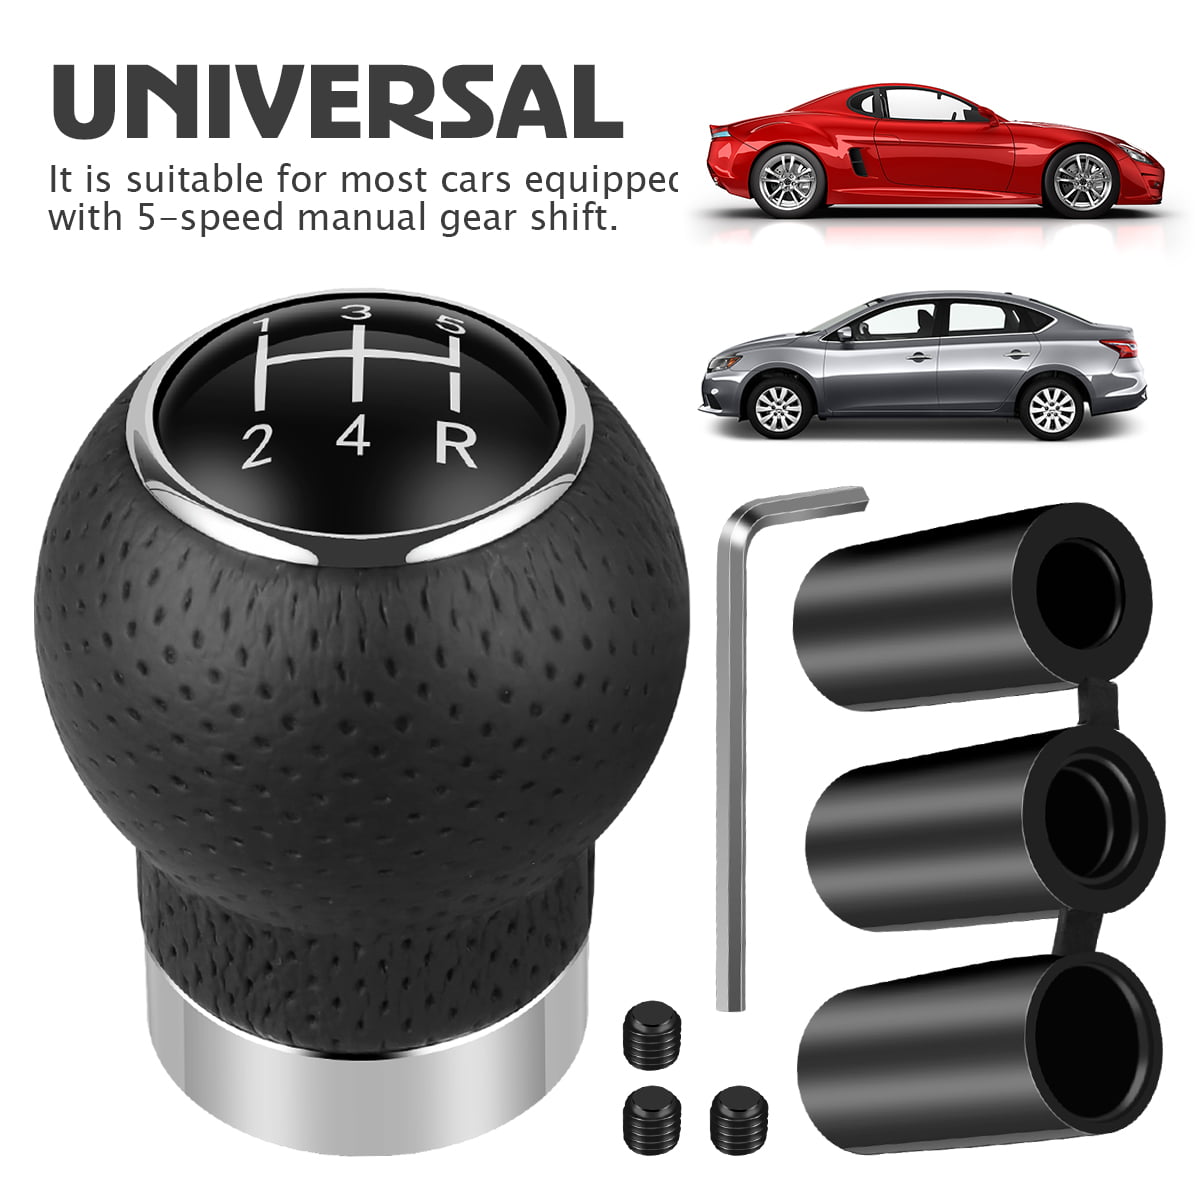 Walbest 1 Pack Car Gear Shift Knob, 5-Speed Acrylic Ball Modified Gear  Stick Head Knob for Universa Car, Red